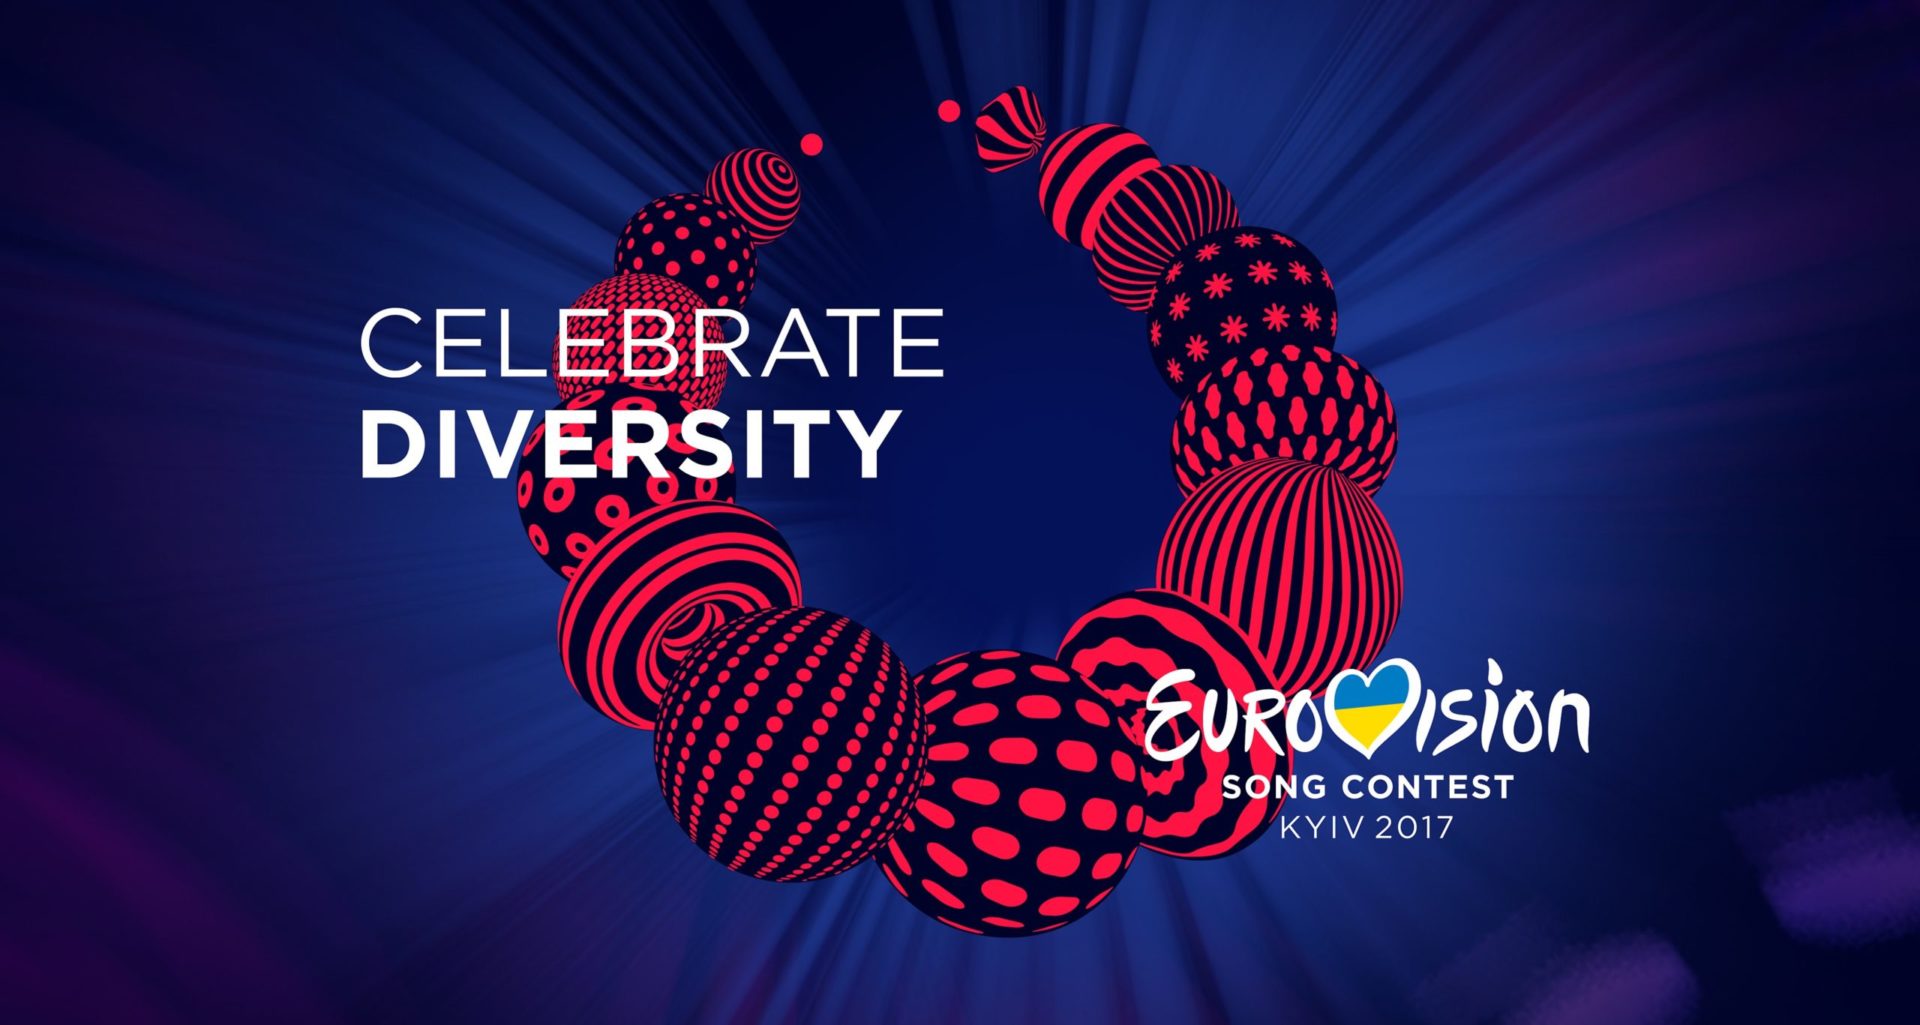 Eurovision Song Contest Kyiv 2017 logo - celebrate diversity